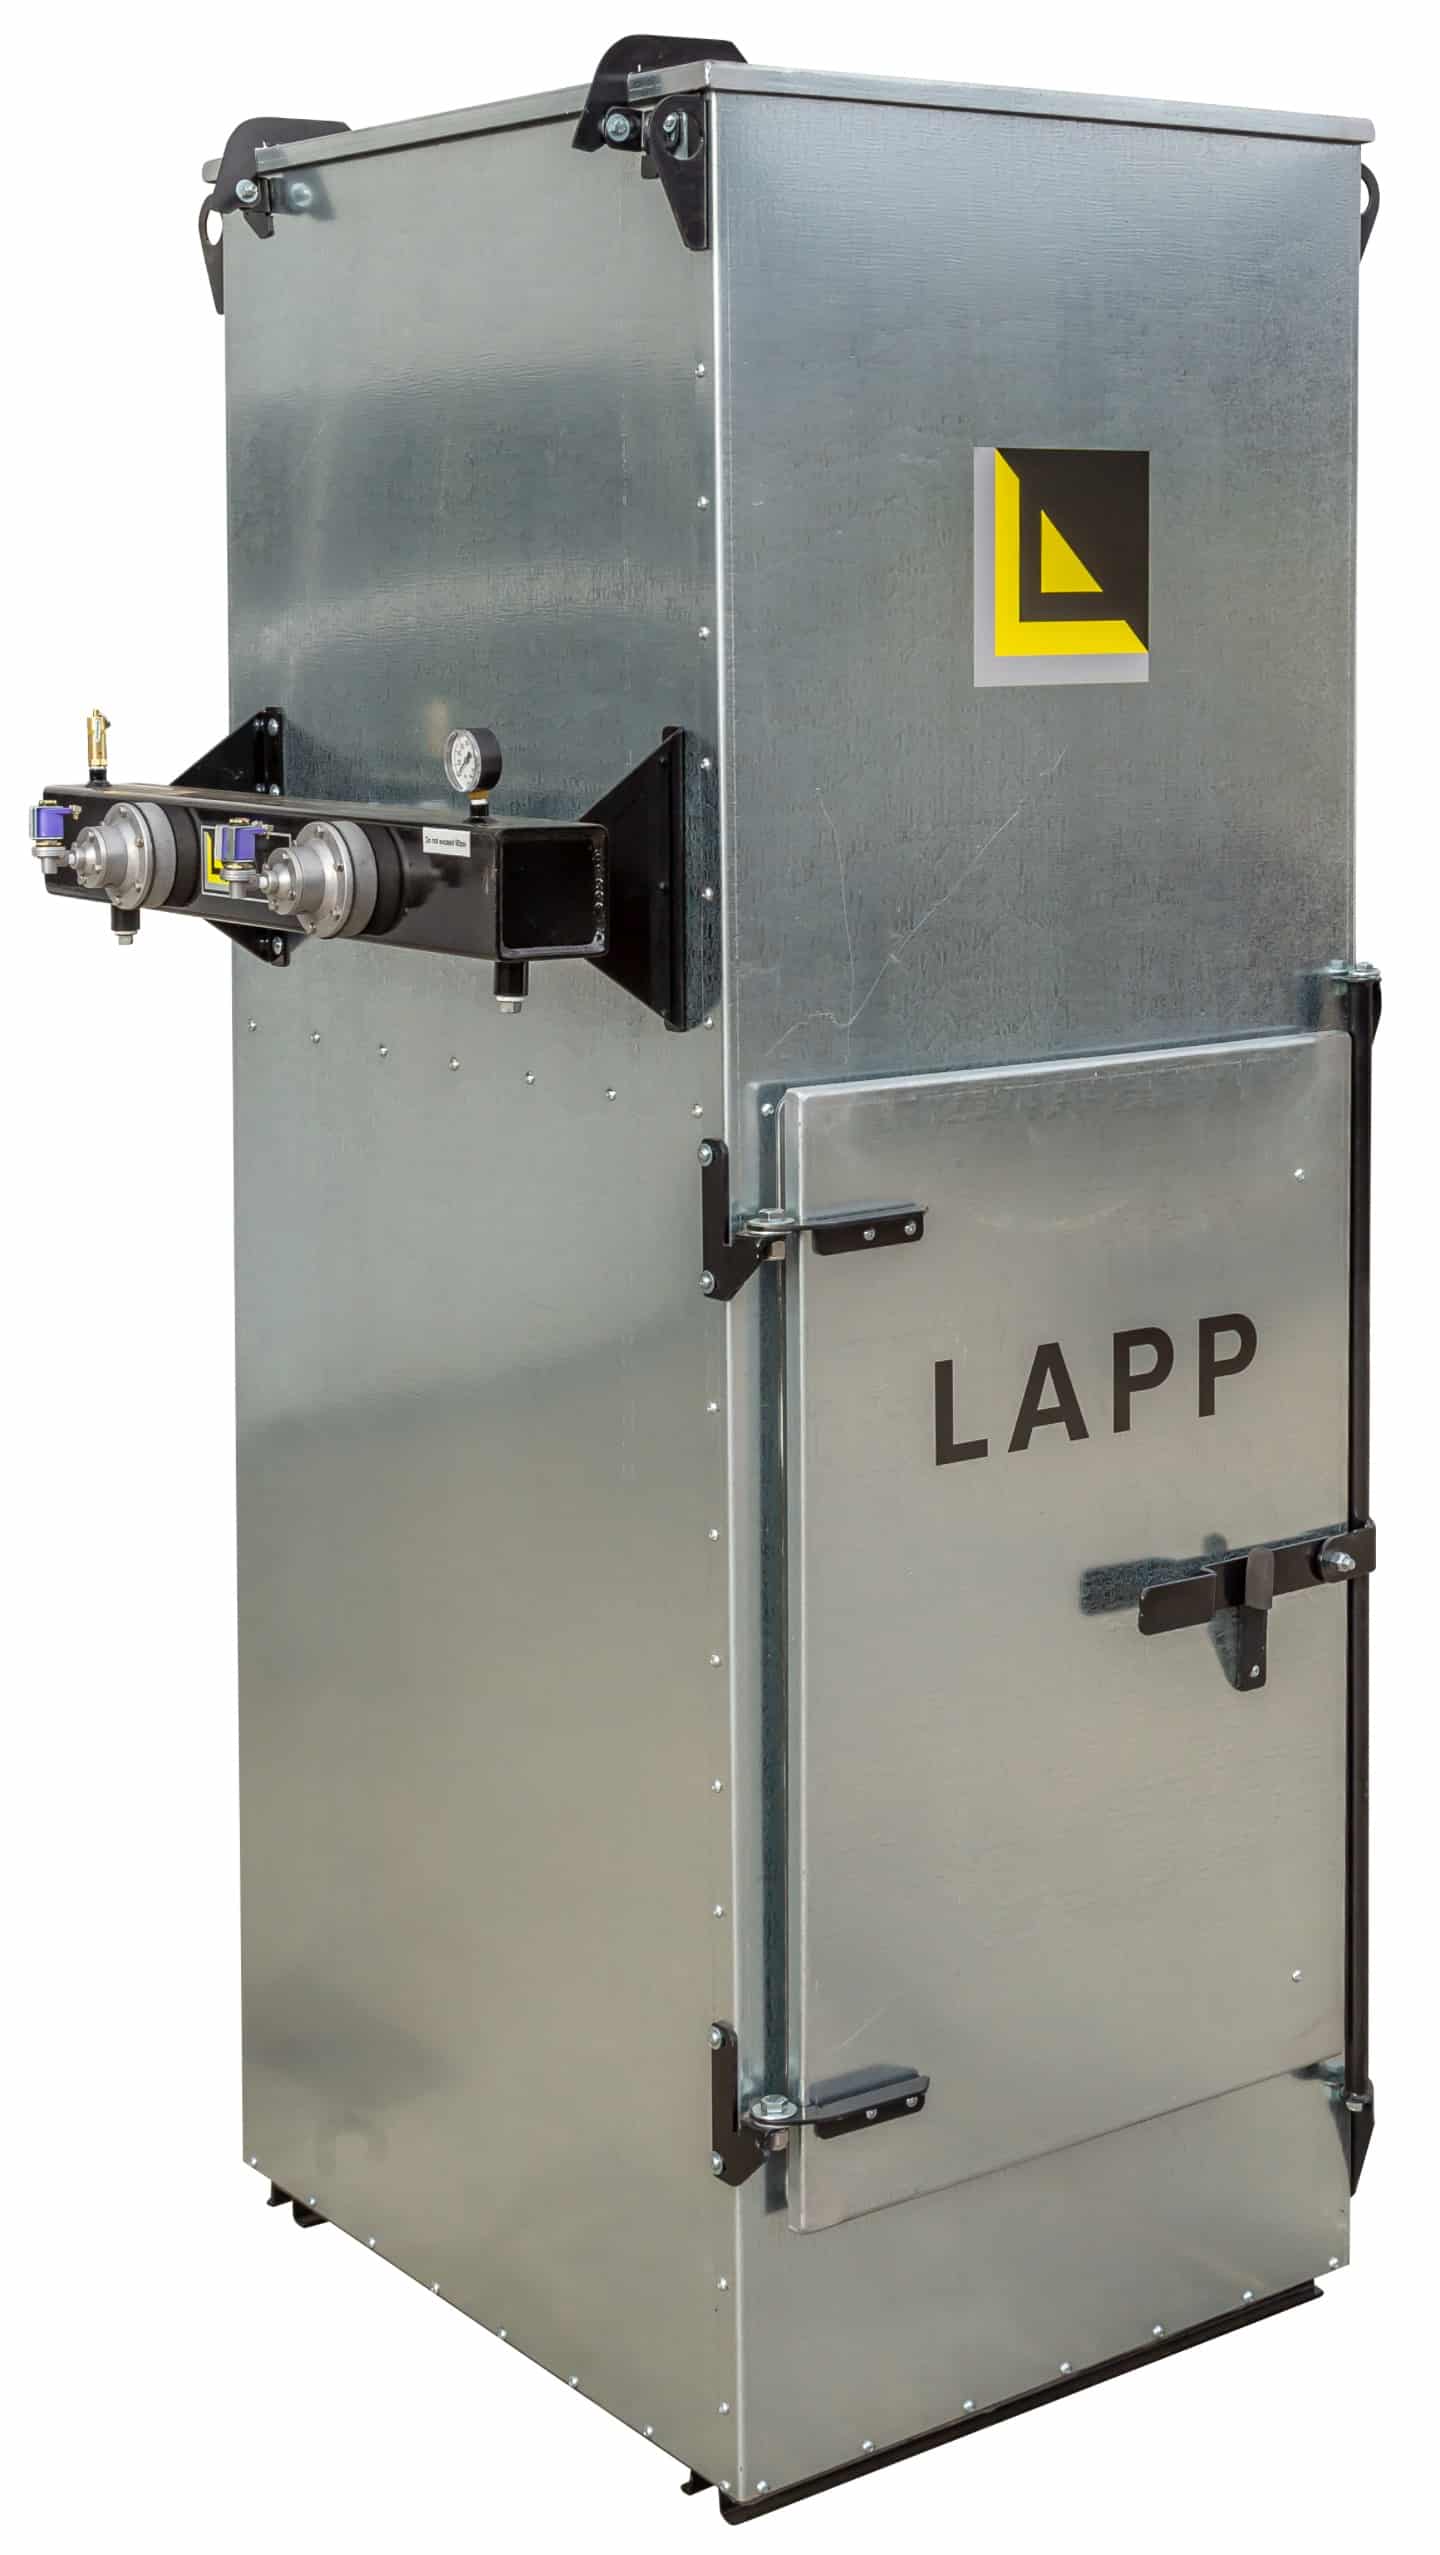 A Lapp Millwright enclosed clean air unit.